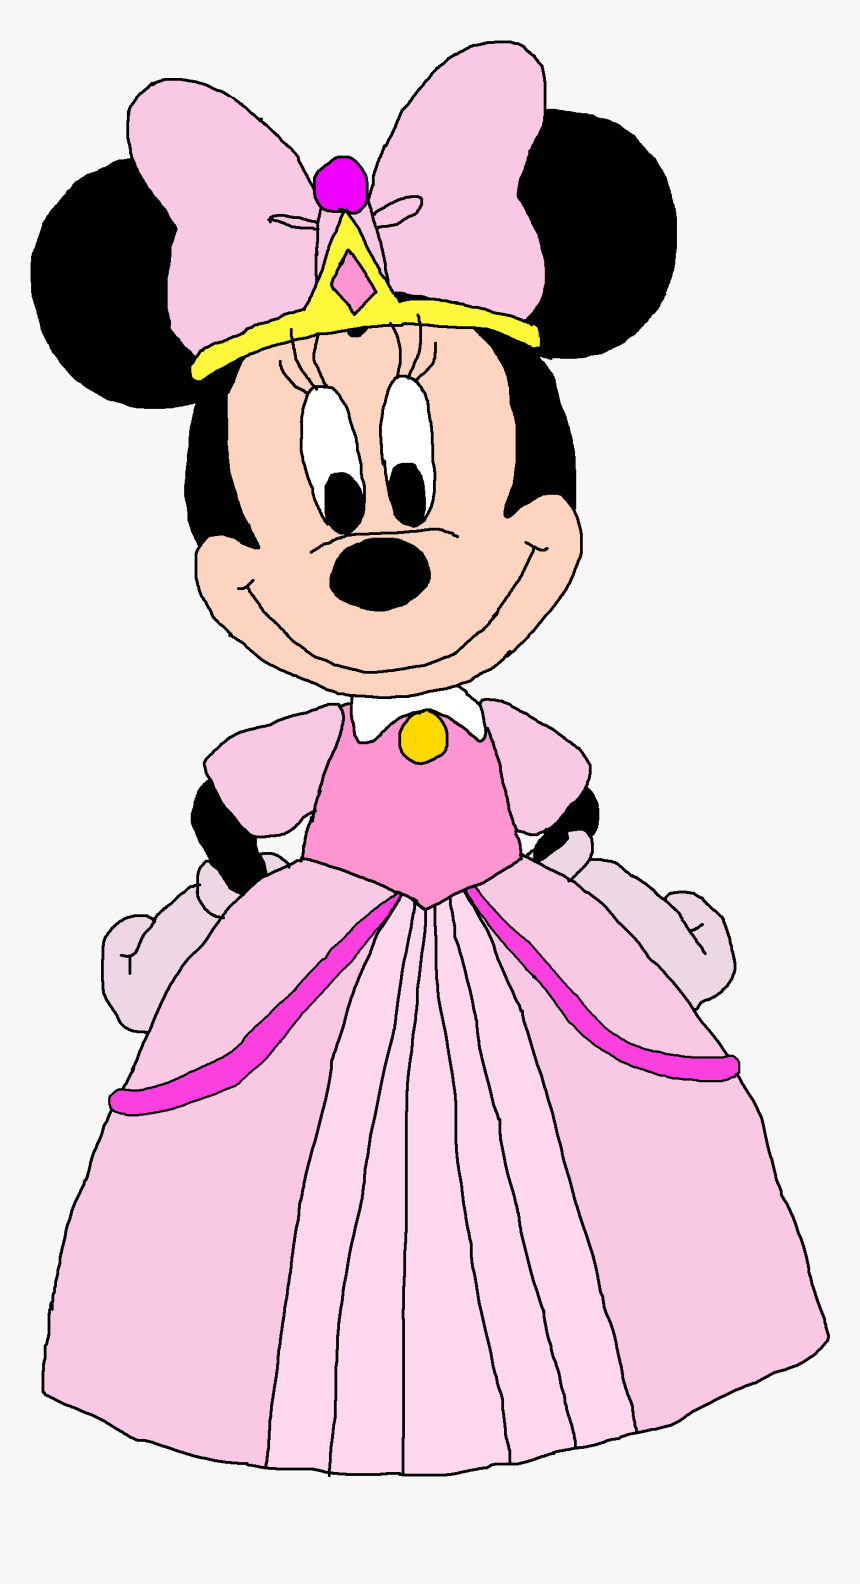 Princess Minnie - Minnie-rella - Minnie Mouse Princess Png, Transparent Png, Free Download